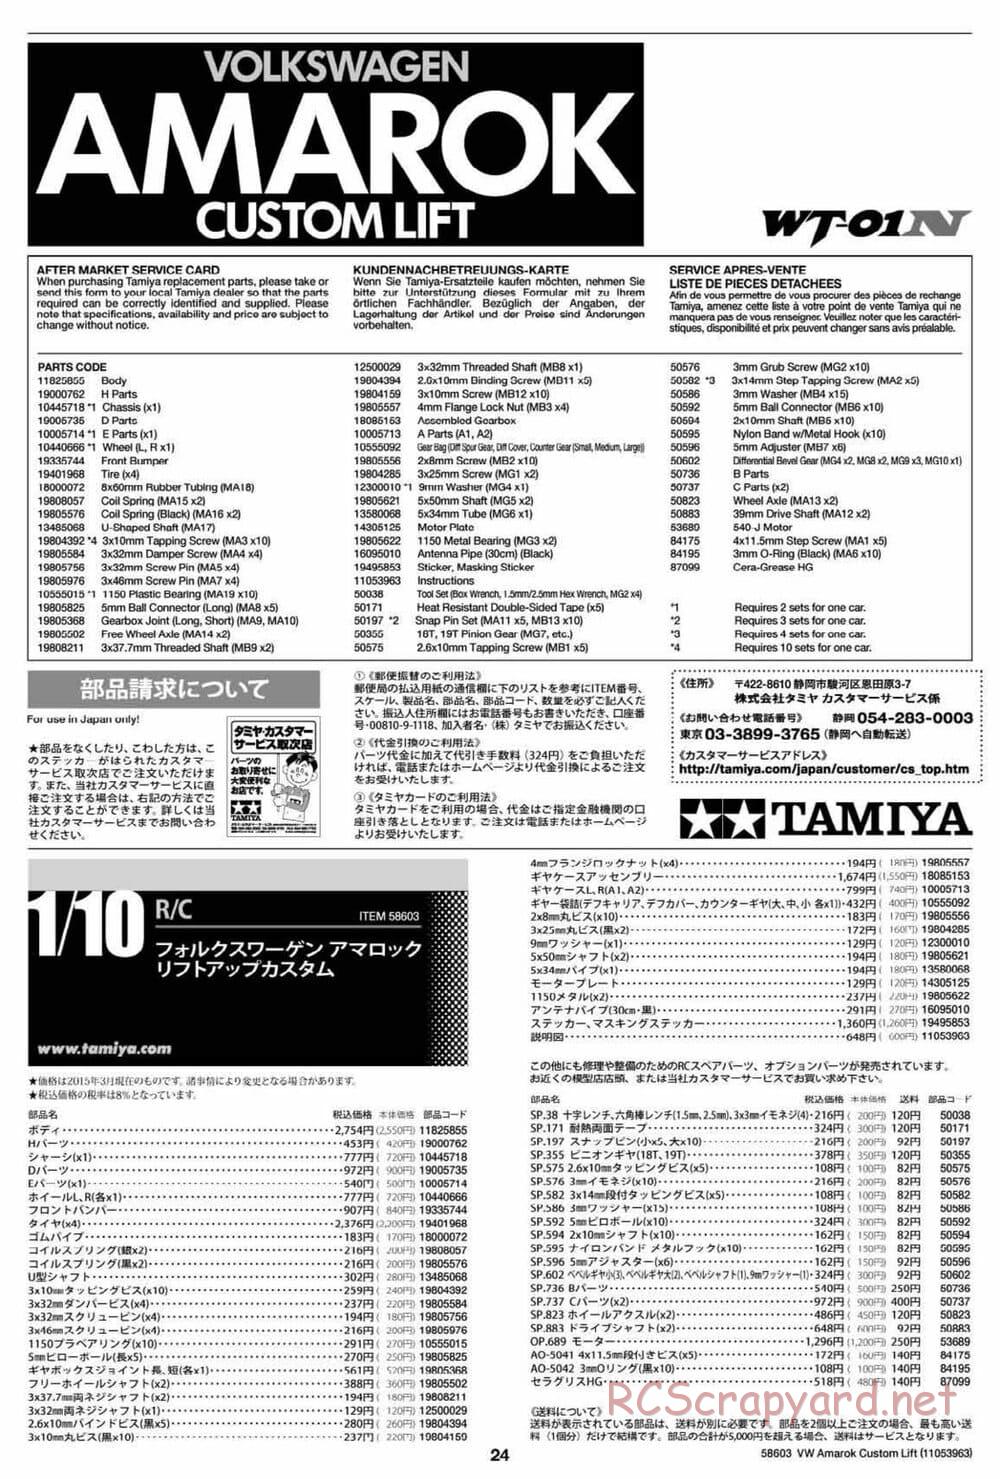 Tamiya - Volkswagen Amarok Custom Lift - WT-01N Chassis - Manual - Page 24